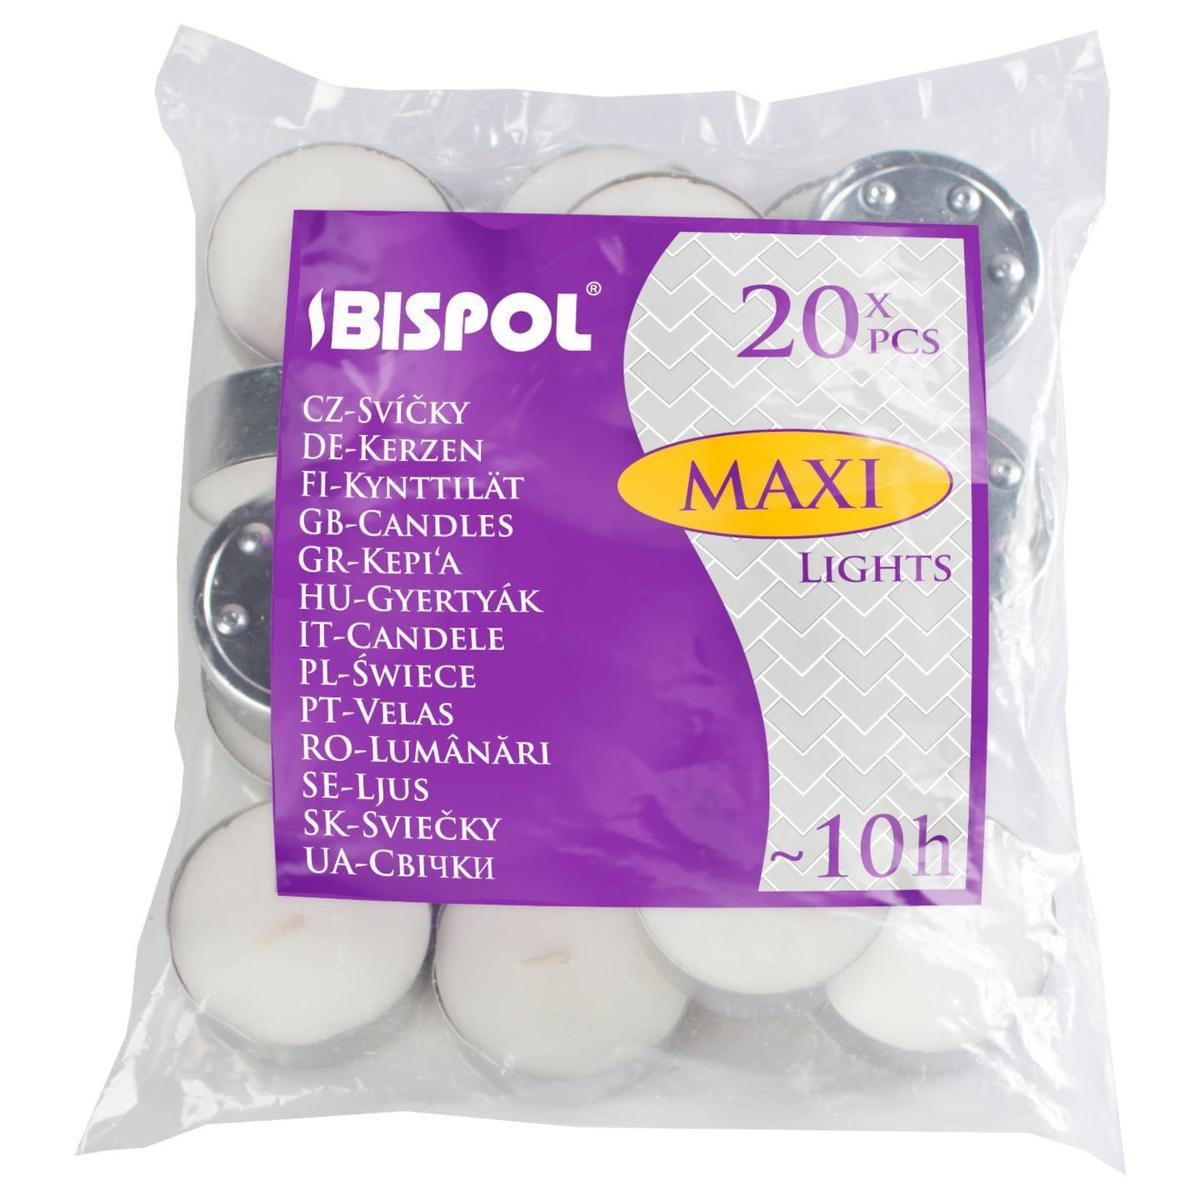 Świece Bispol Maxi Lights 10h 20 sztuk nr. 1